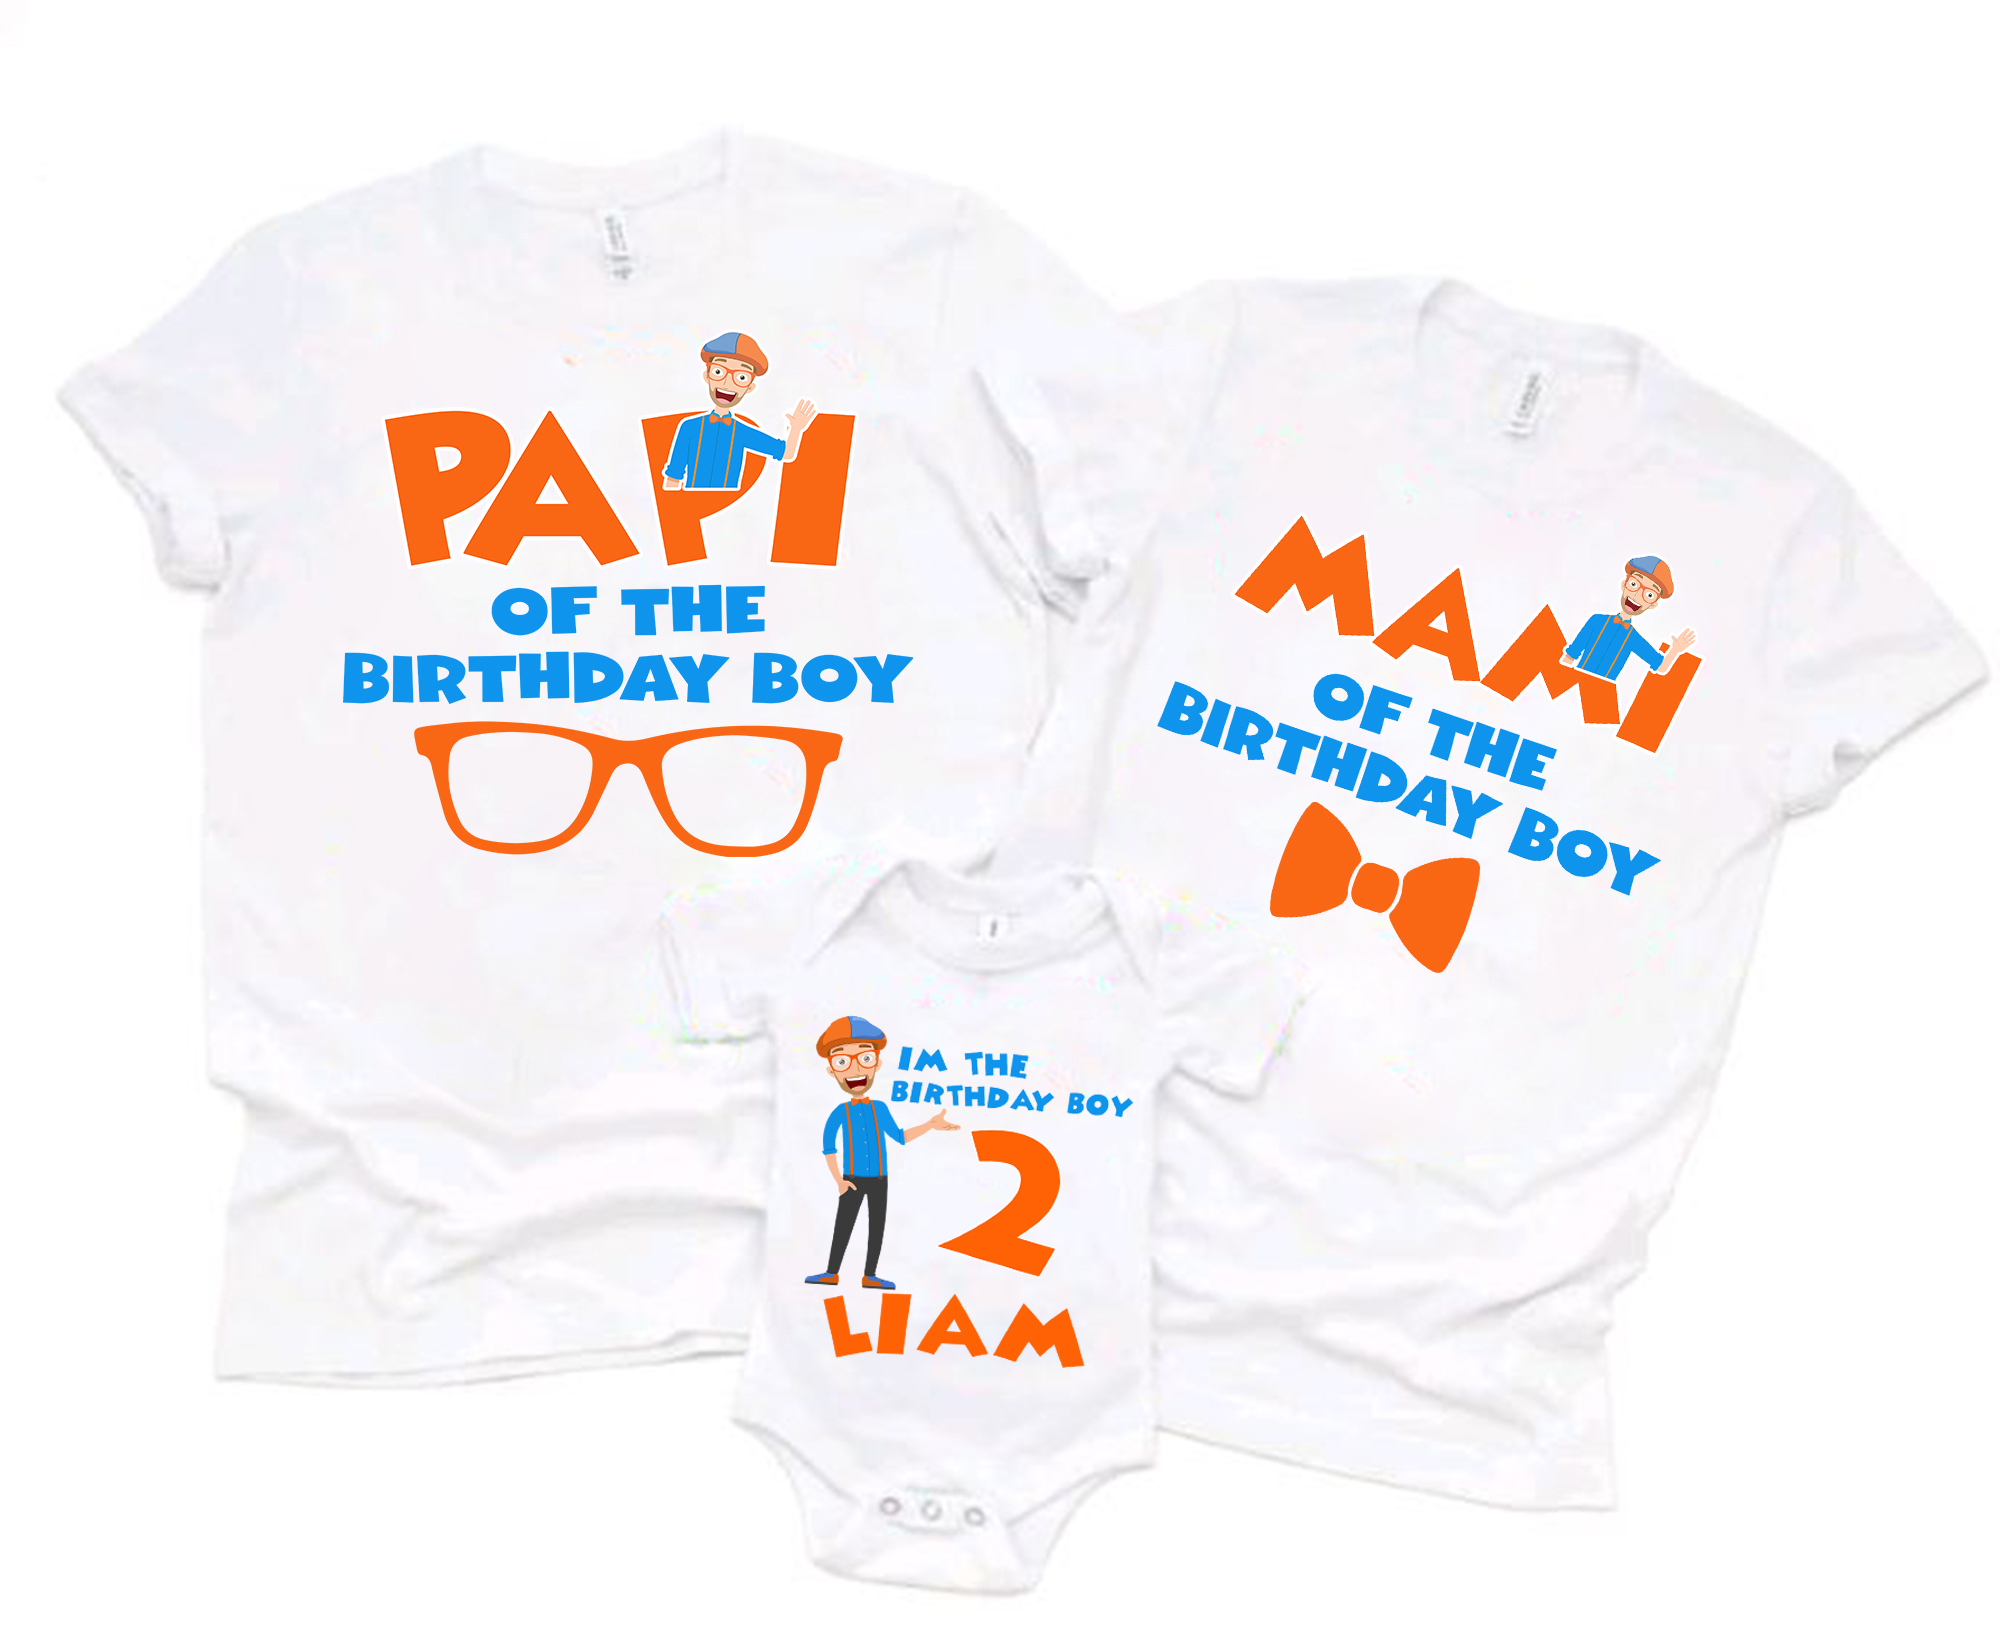 Personalized Blippi Birthday Shirts, Family Blippi shirts set, Blippi birthday Theme Shirts, Matching Family Party Shirts